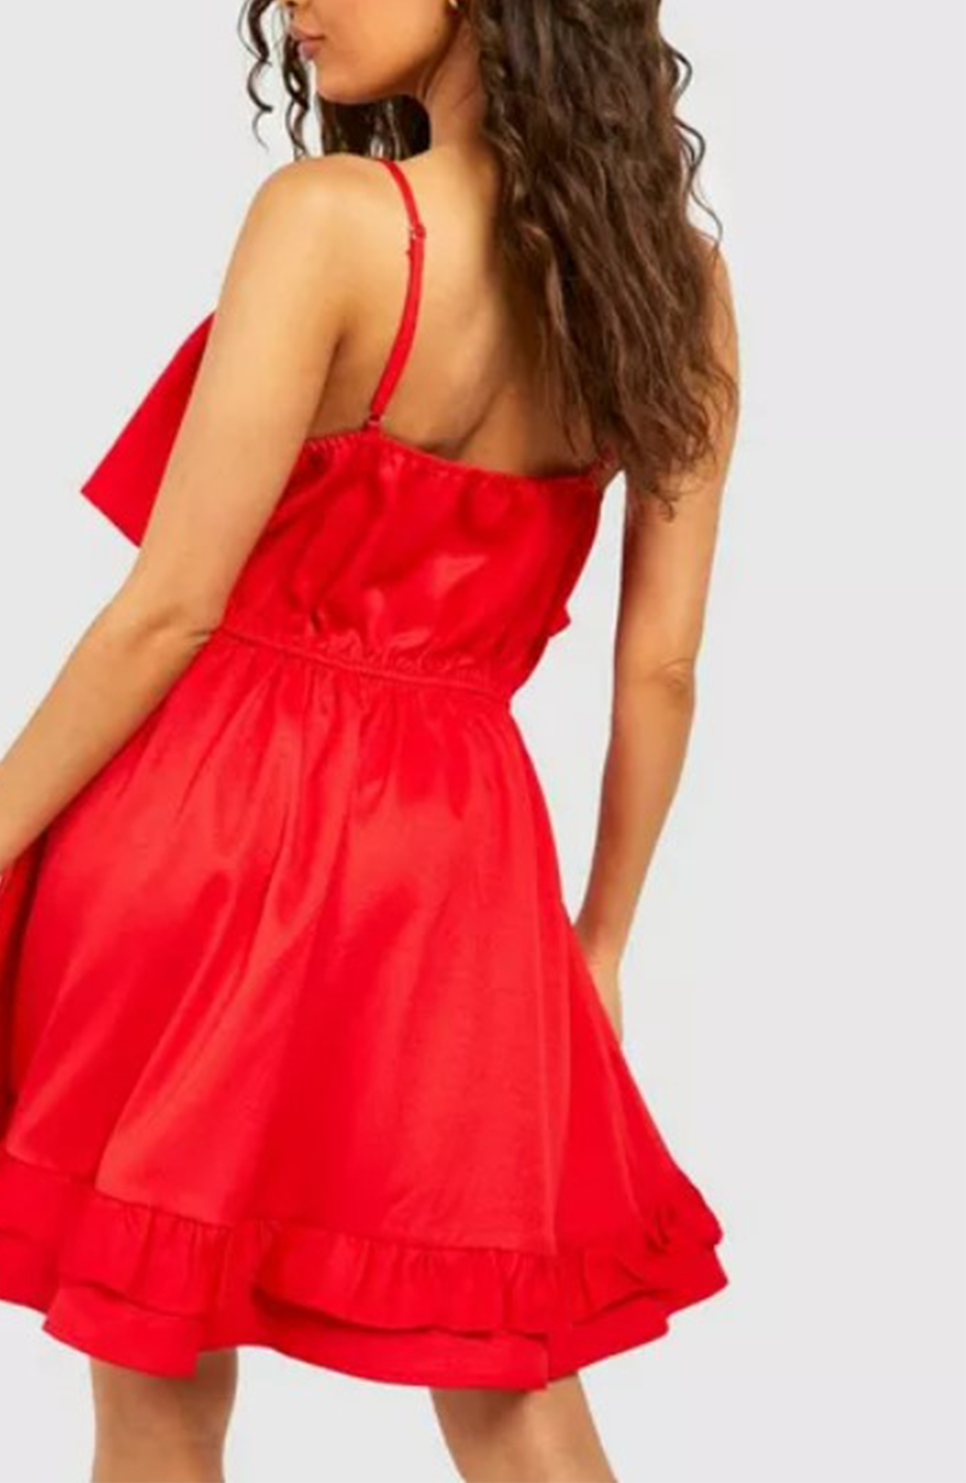 Foxy Red Dress